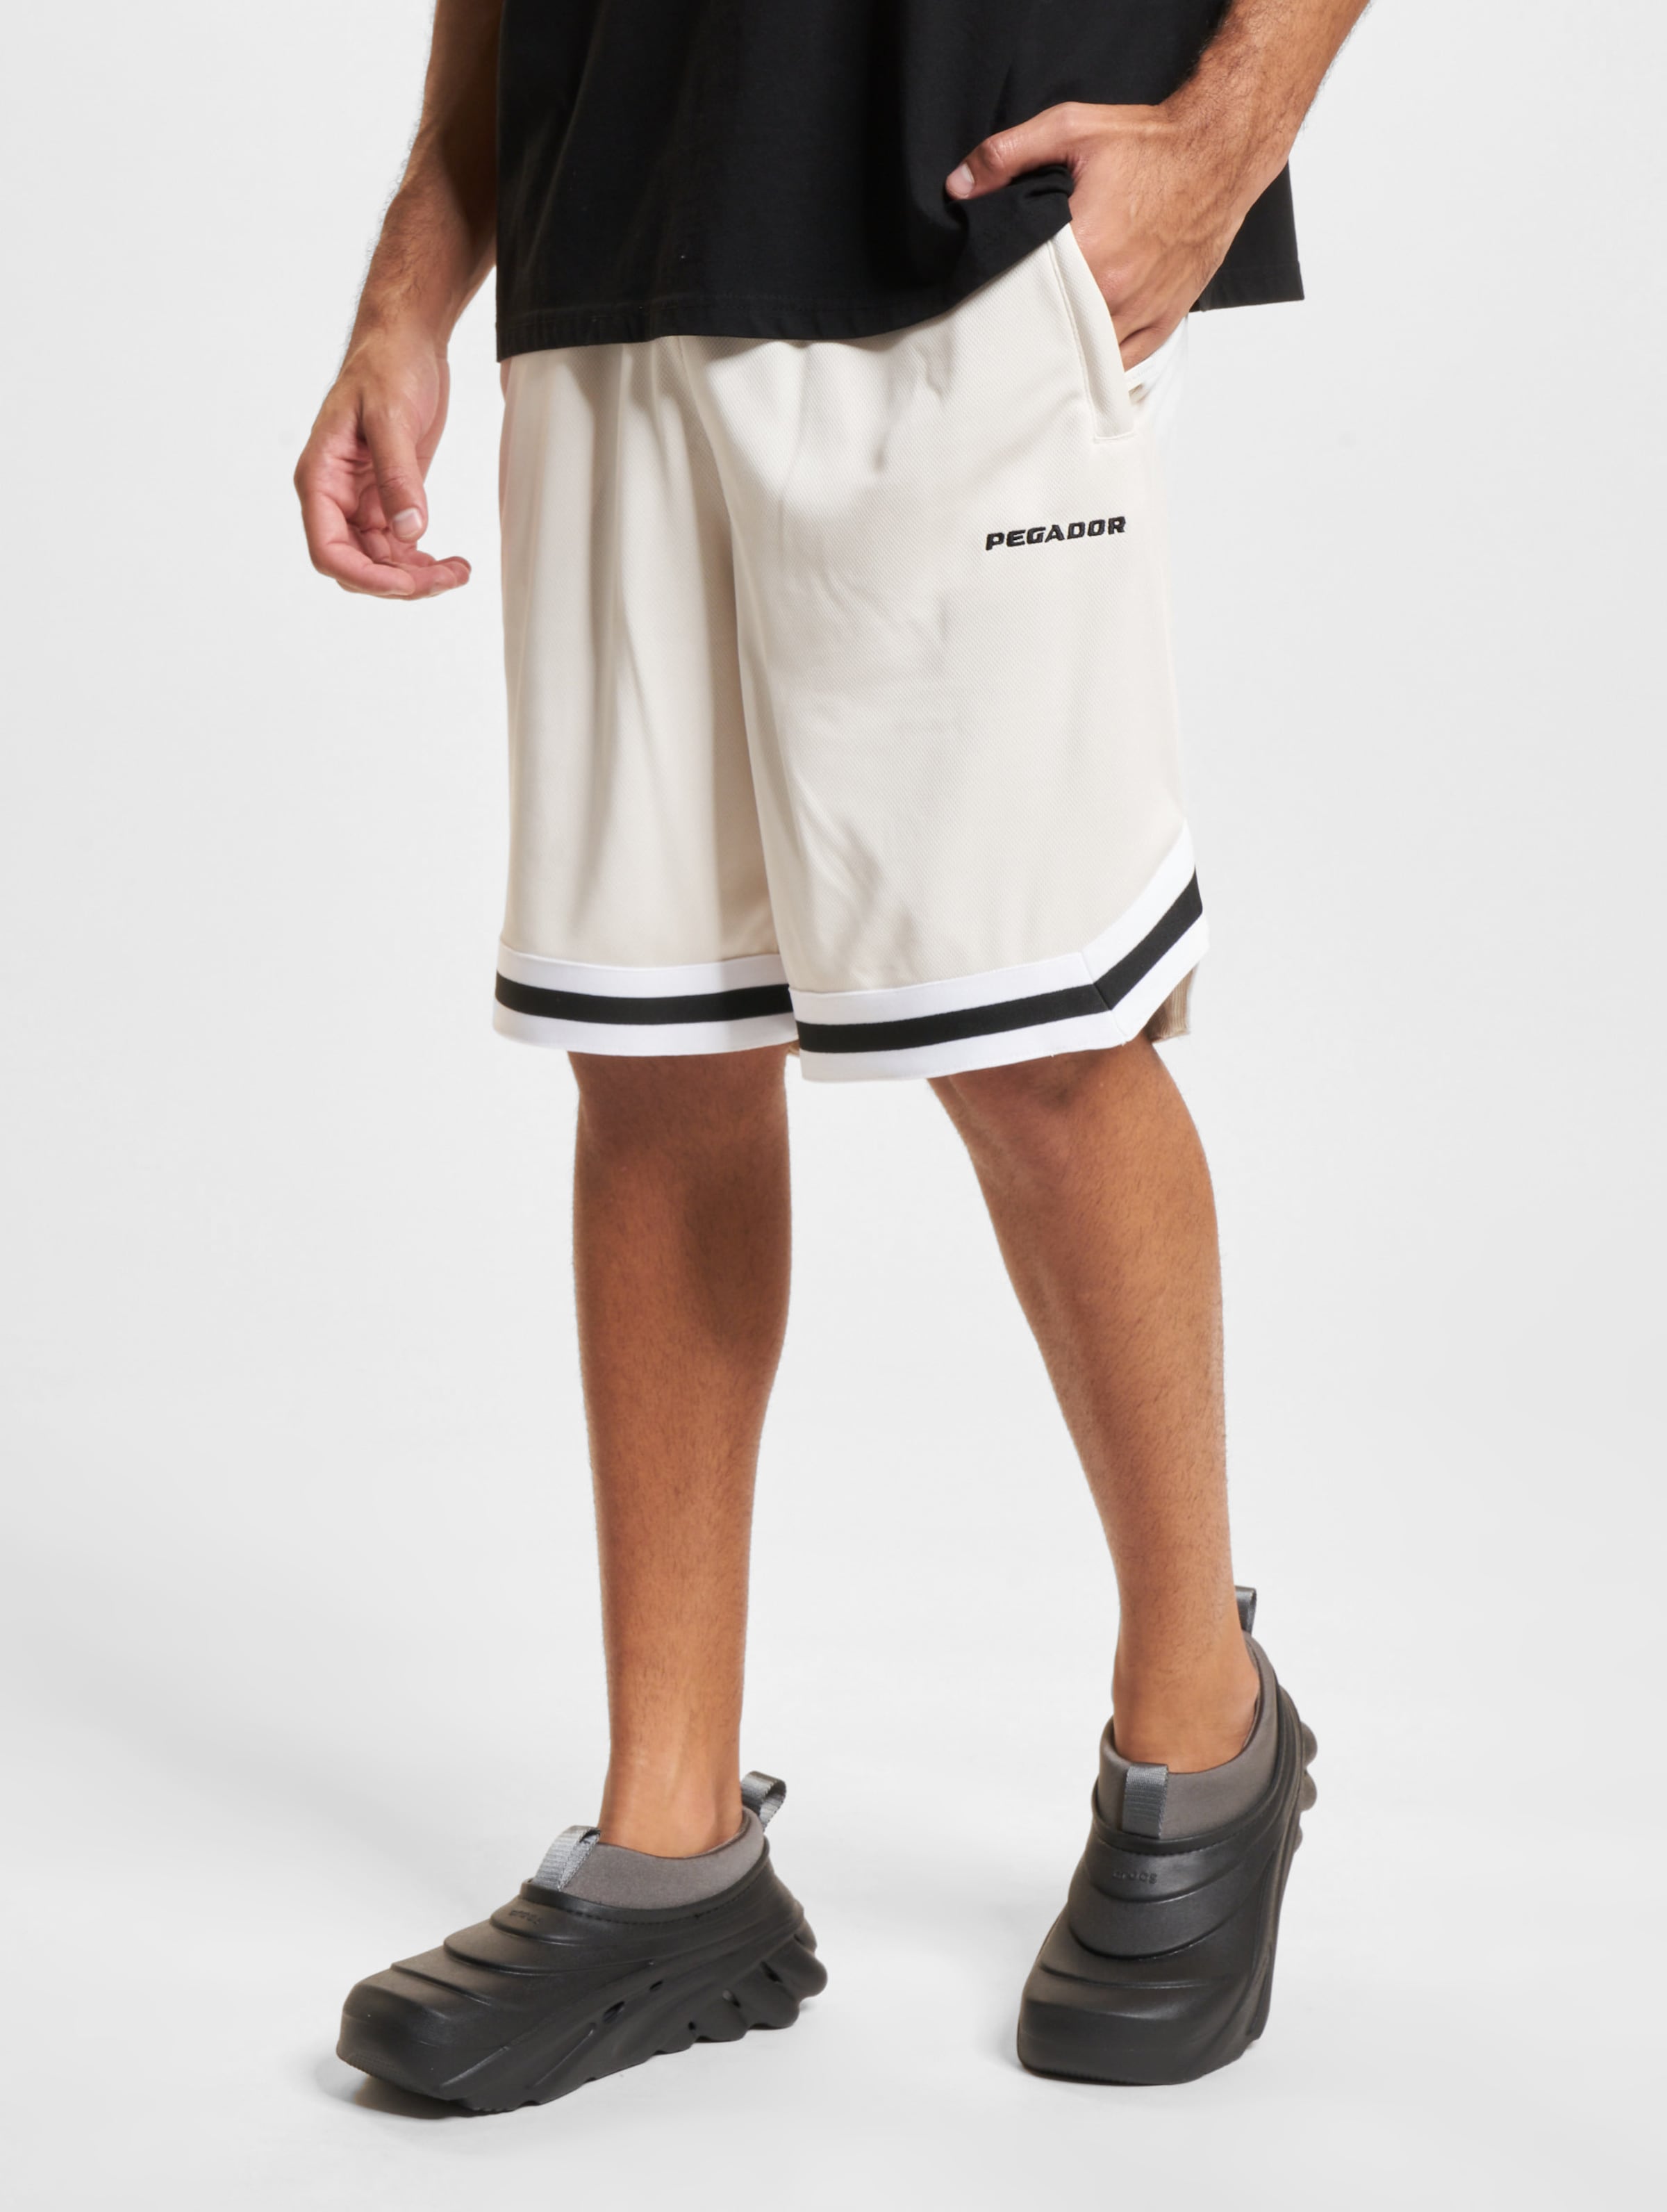 PEGADOR Lansing Basketball Shorts Männer,Unisex op kleur wit, Maat S